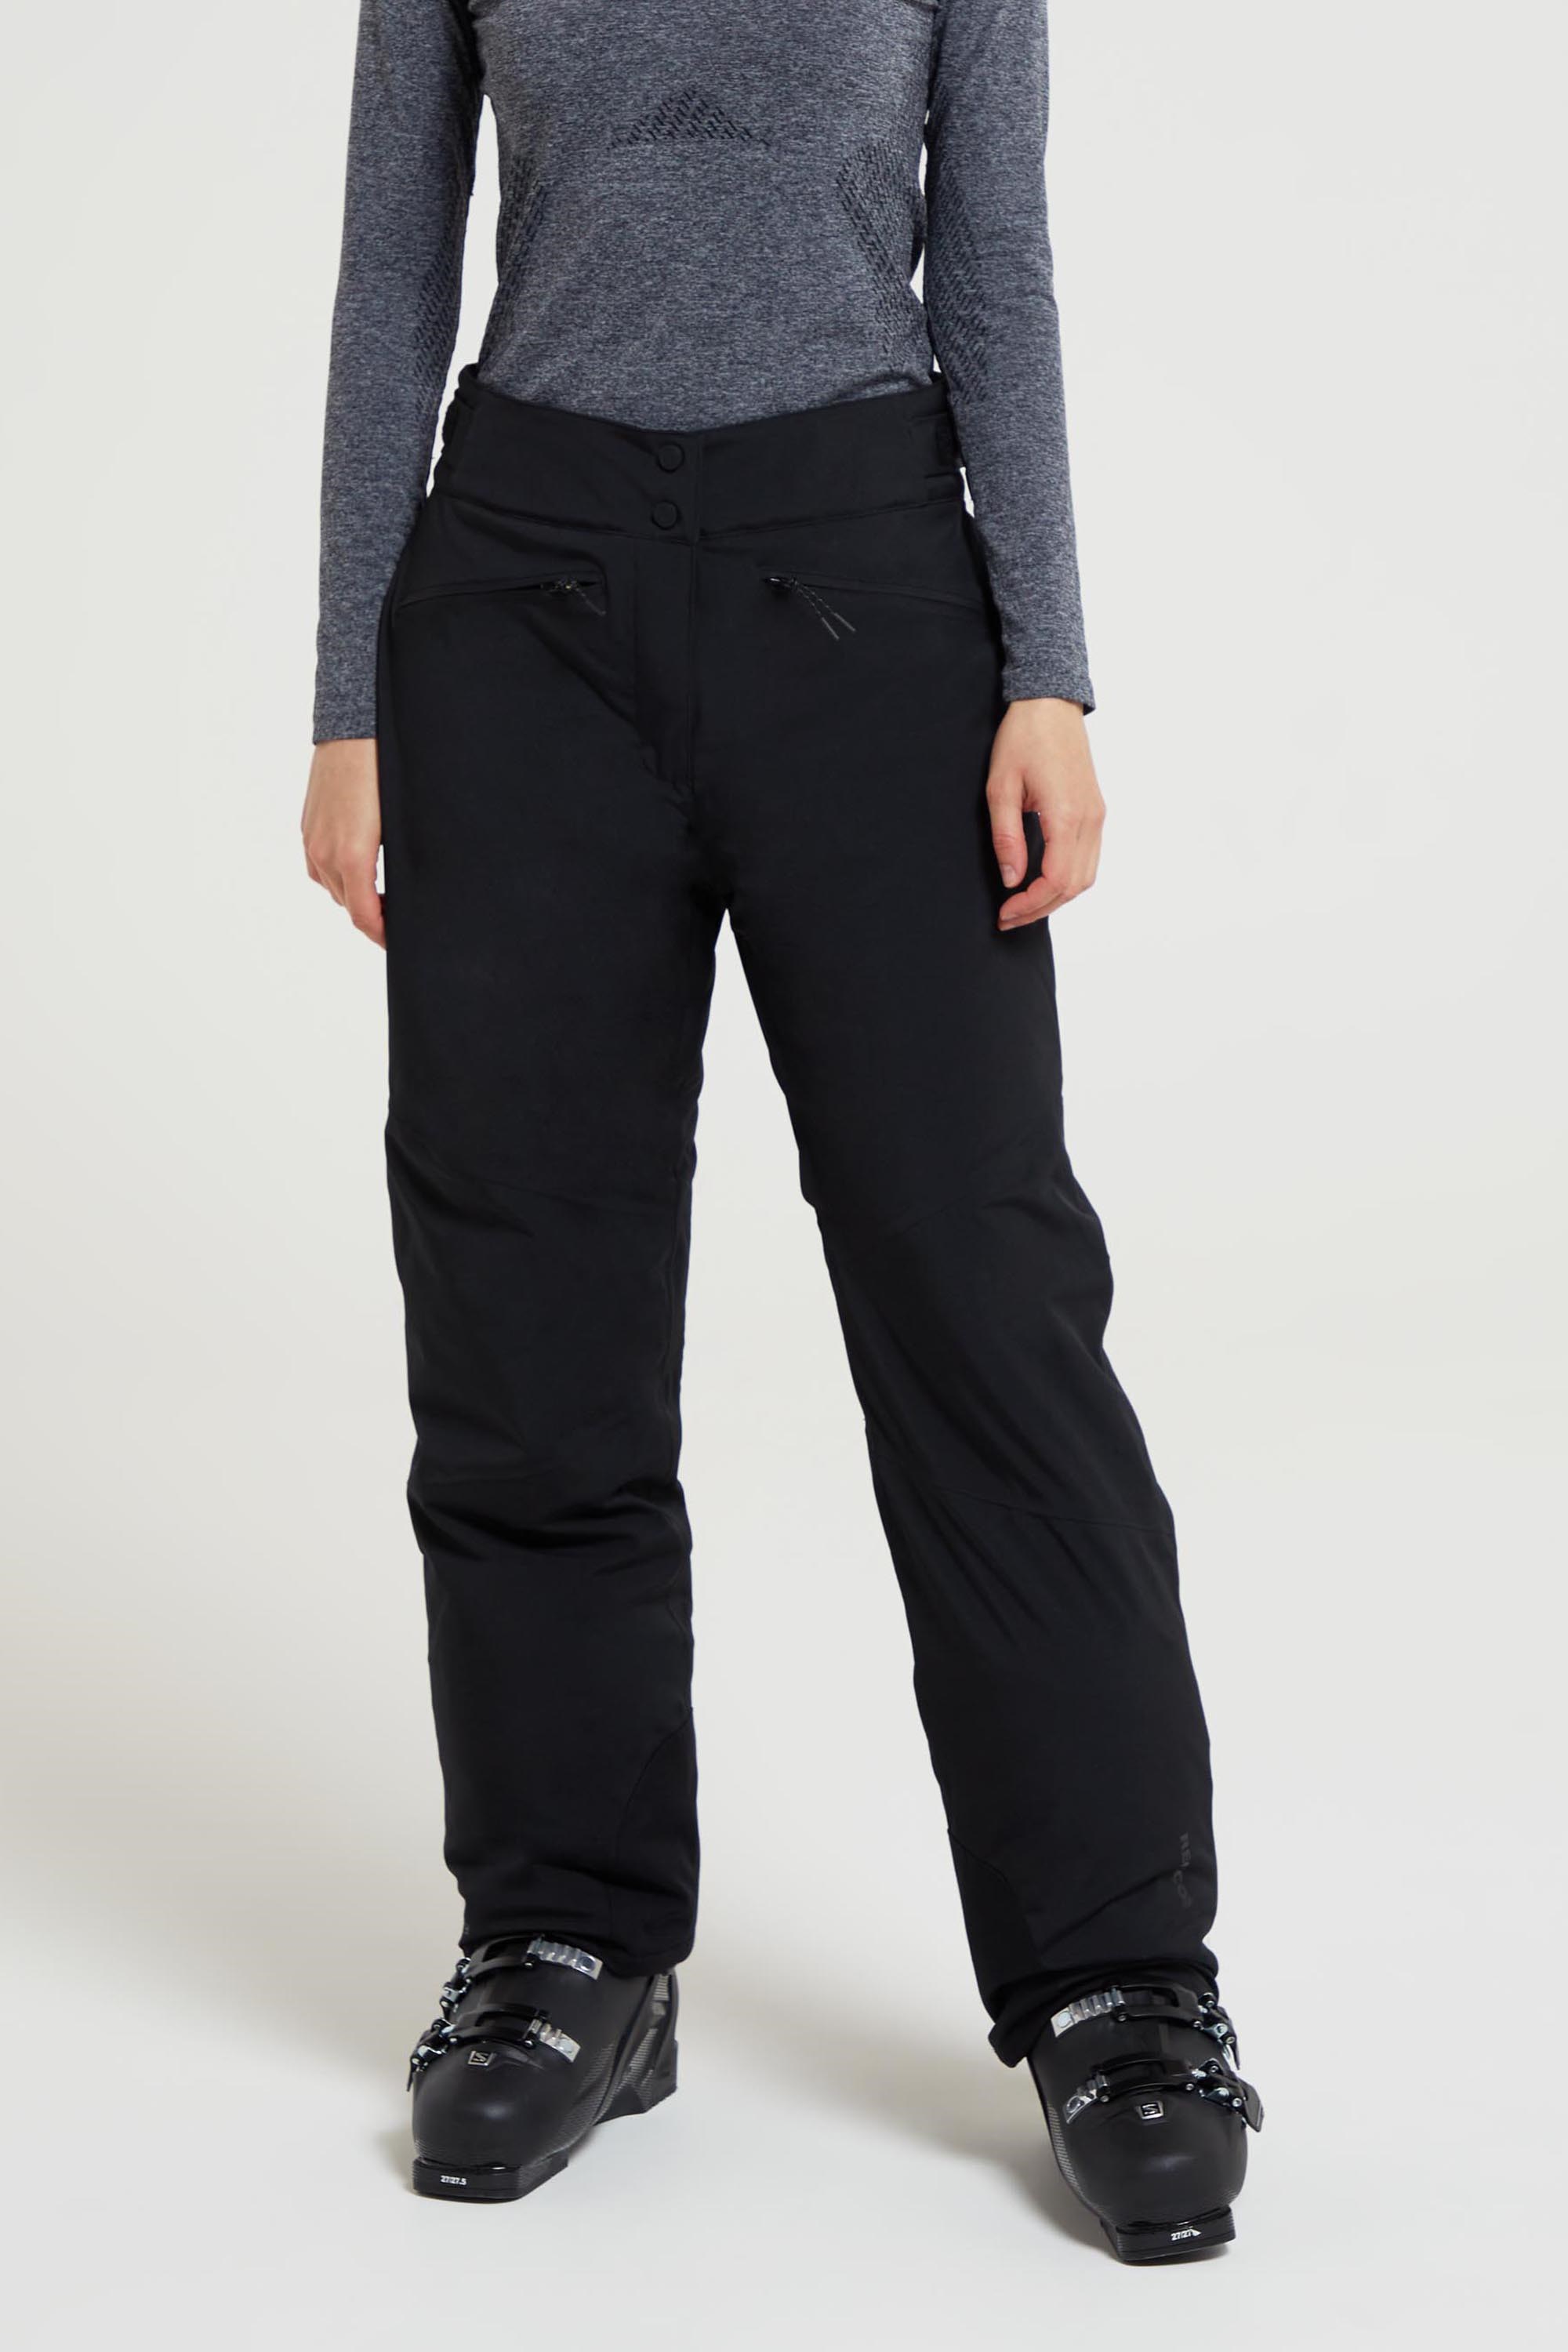 Buy Tog 24 Womens Black Steward Waterproof Regular Ski Trousers from Next  Australia